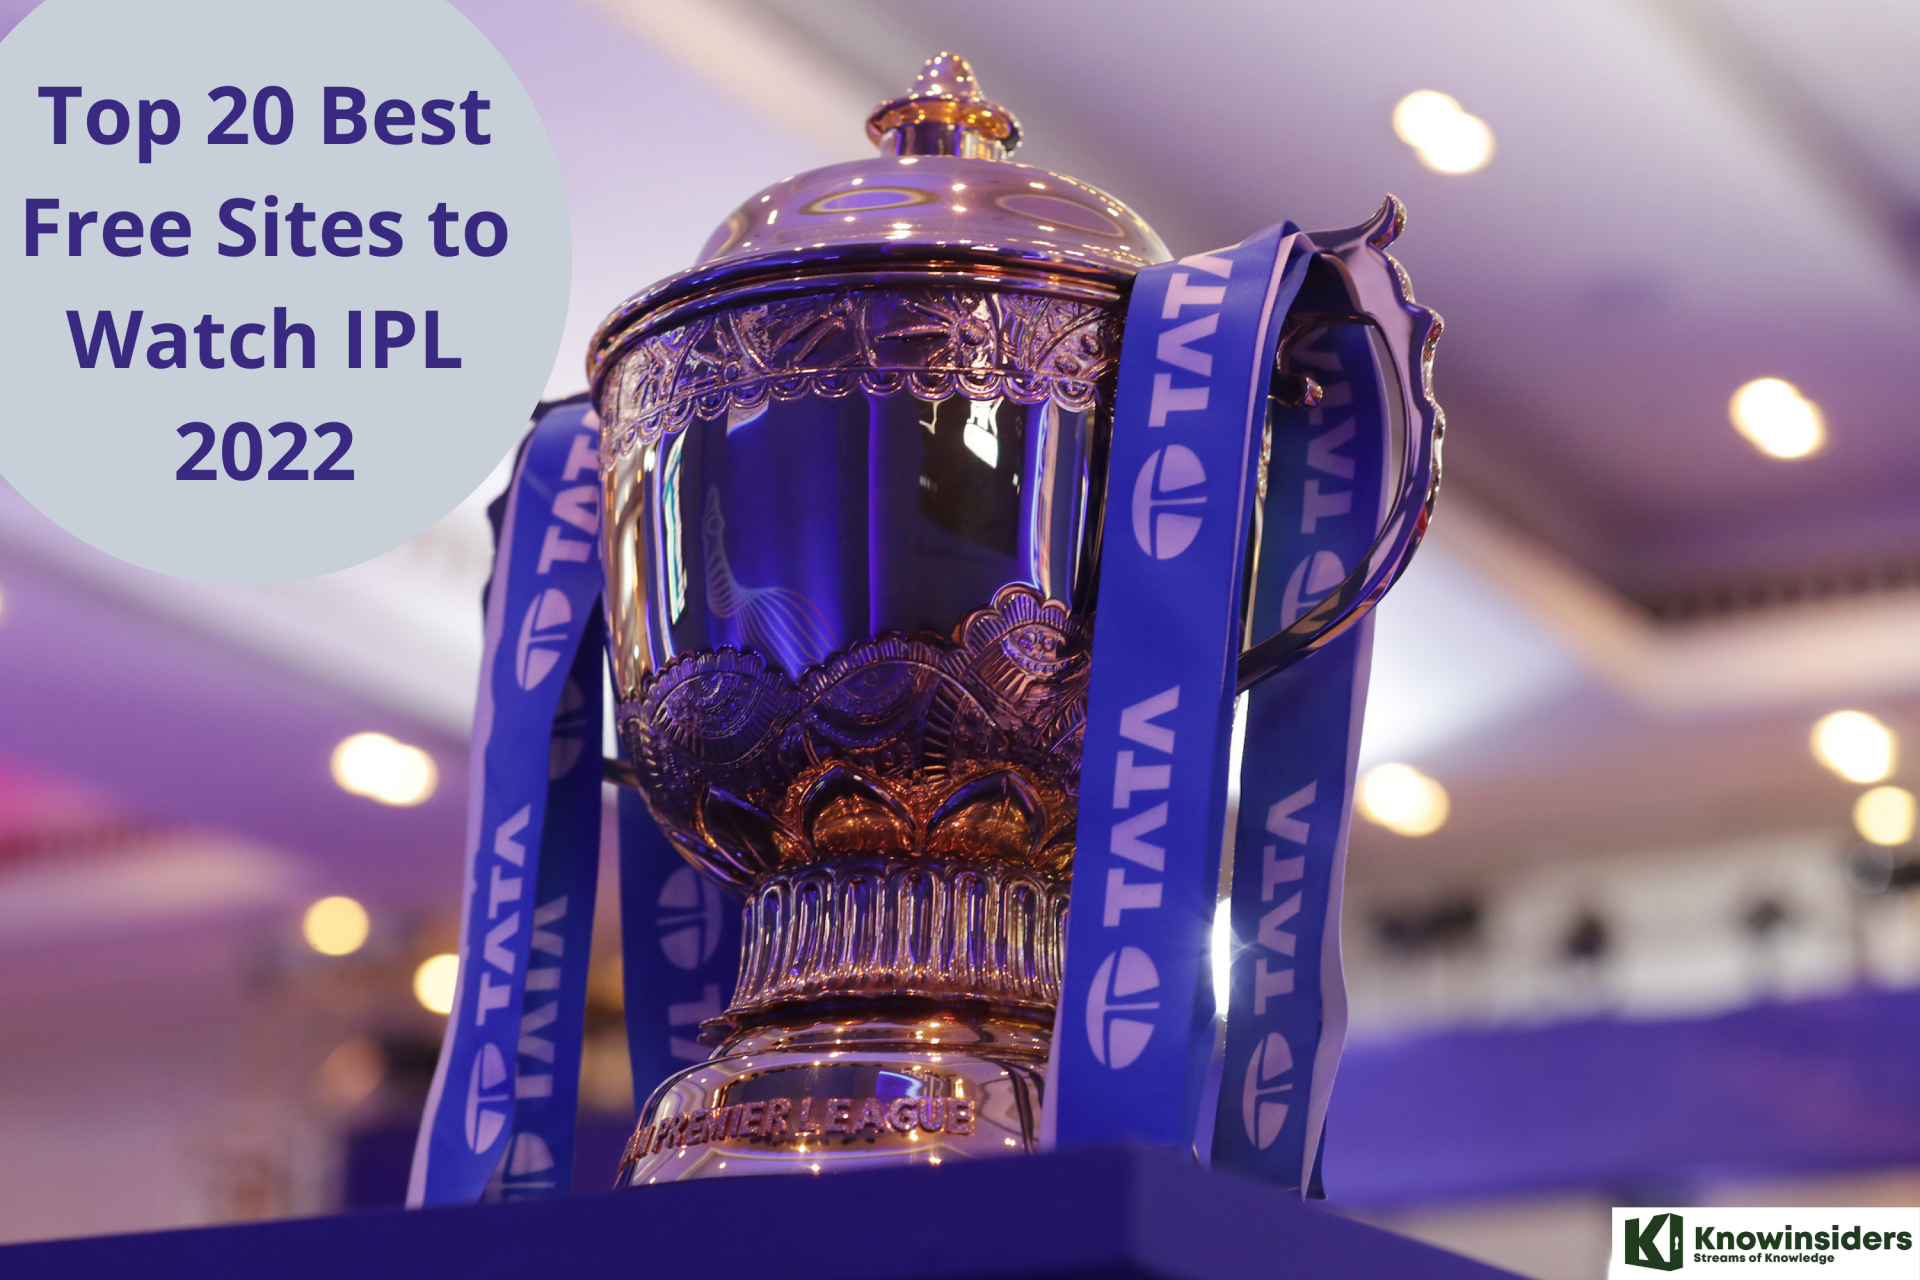 Top 20 Best Free Sites to Watch IPL 2022